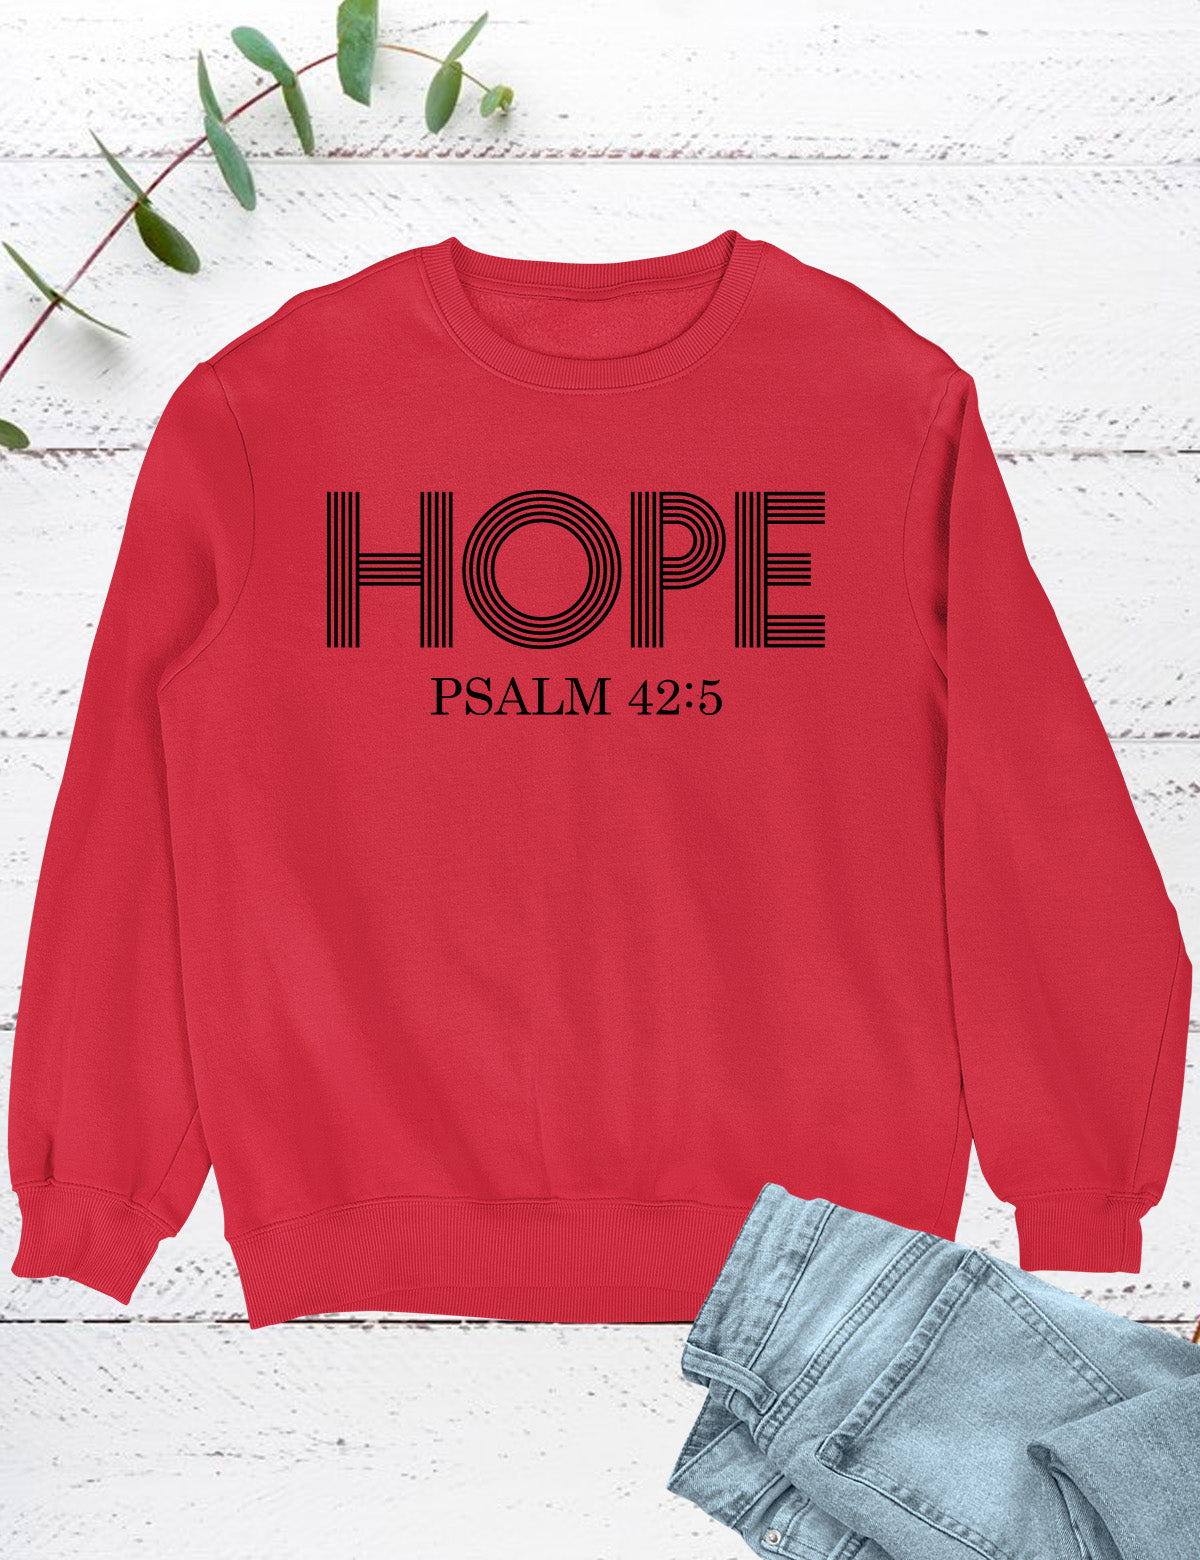 Hope Psalm 42:5 Inspirational Christian Sweatshirts